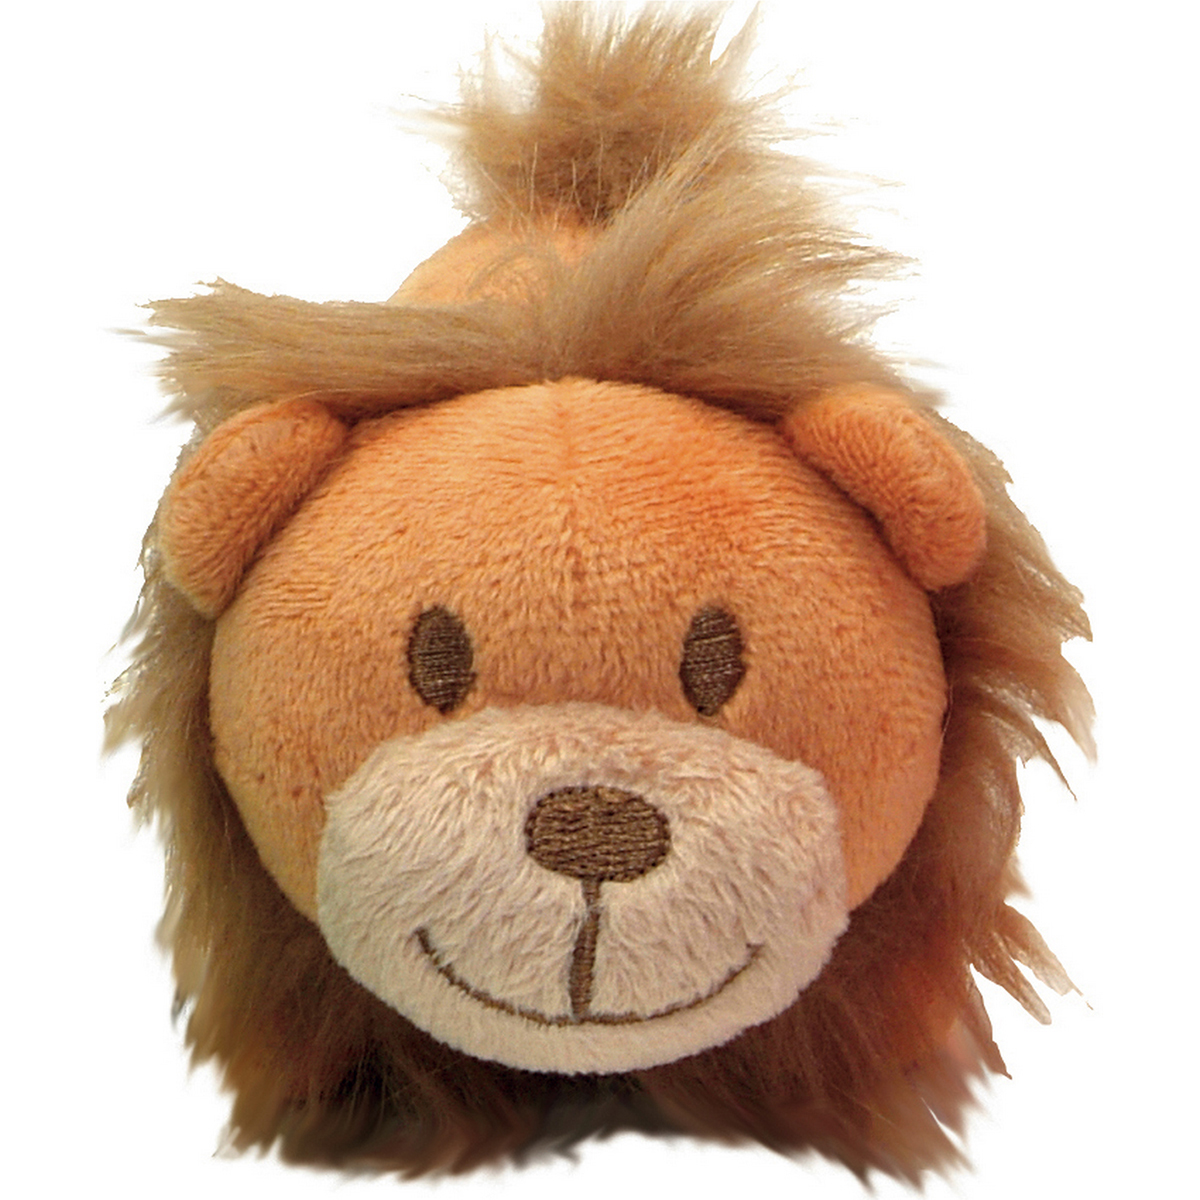 84207-lio 4.5 In. Lil Pals Plush Dog Toy - Lion, Brown